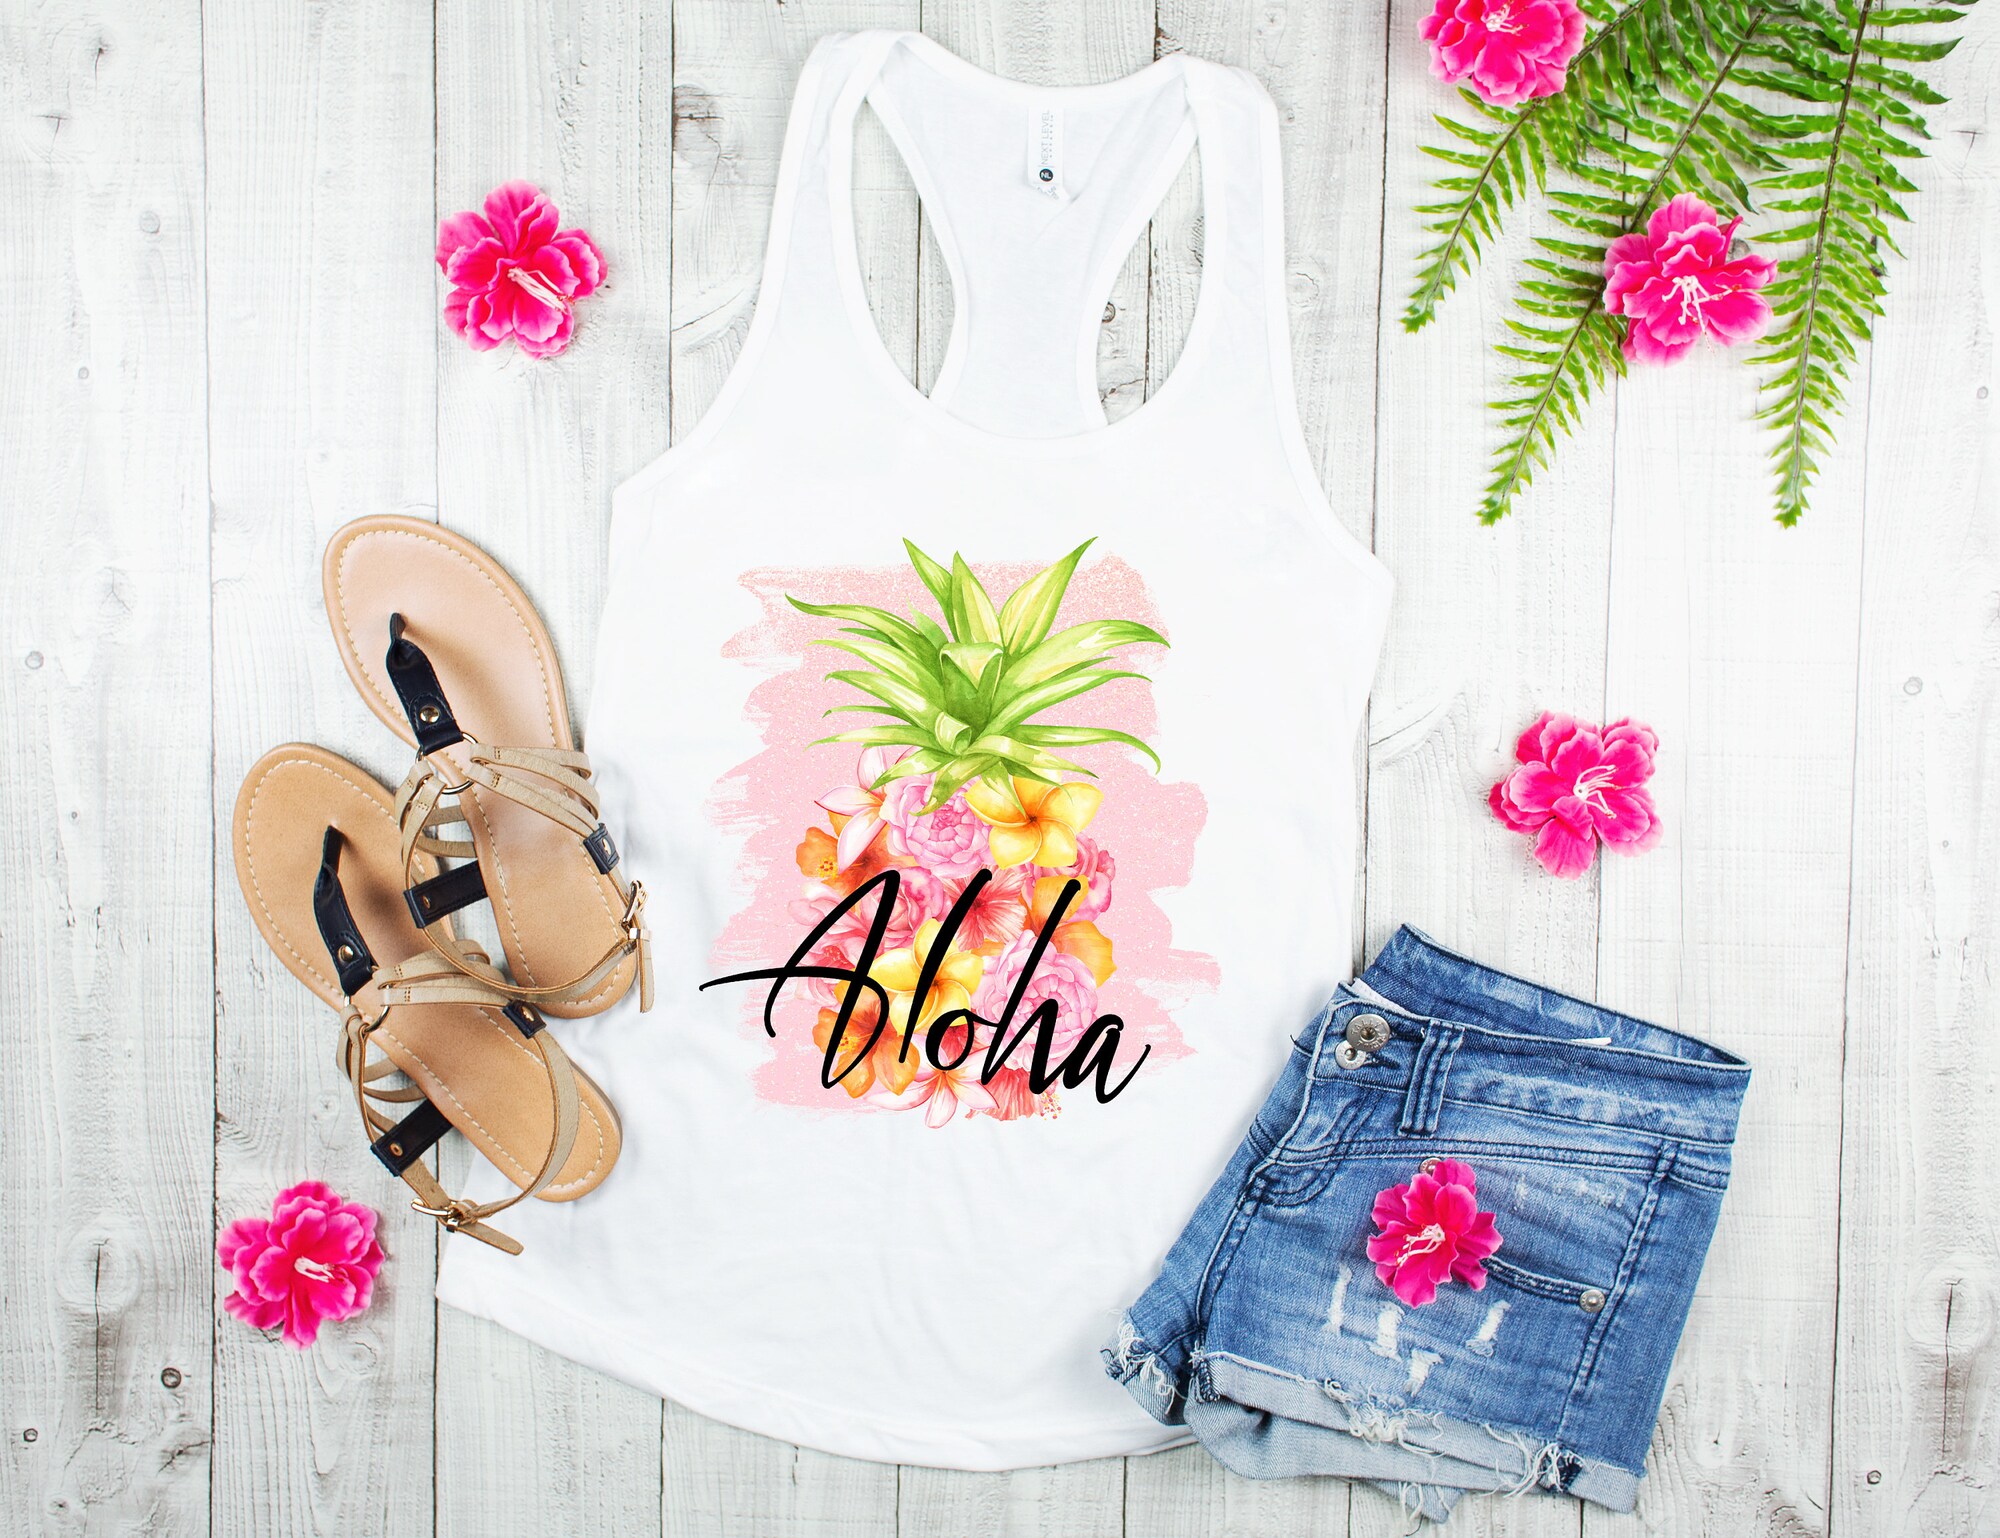 Aloha! Women's Summer Tank